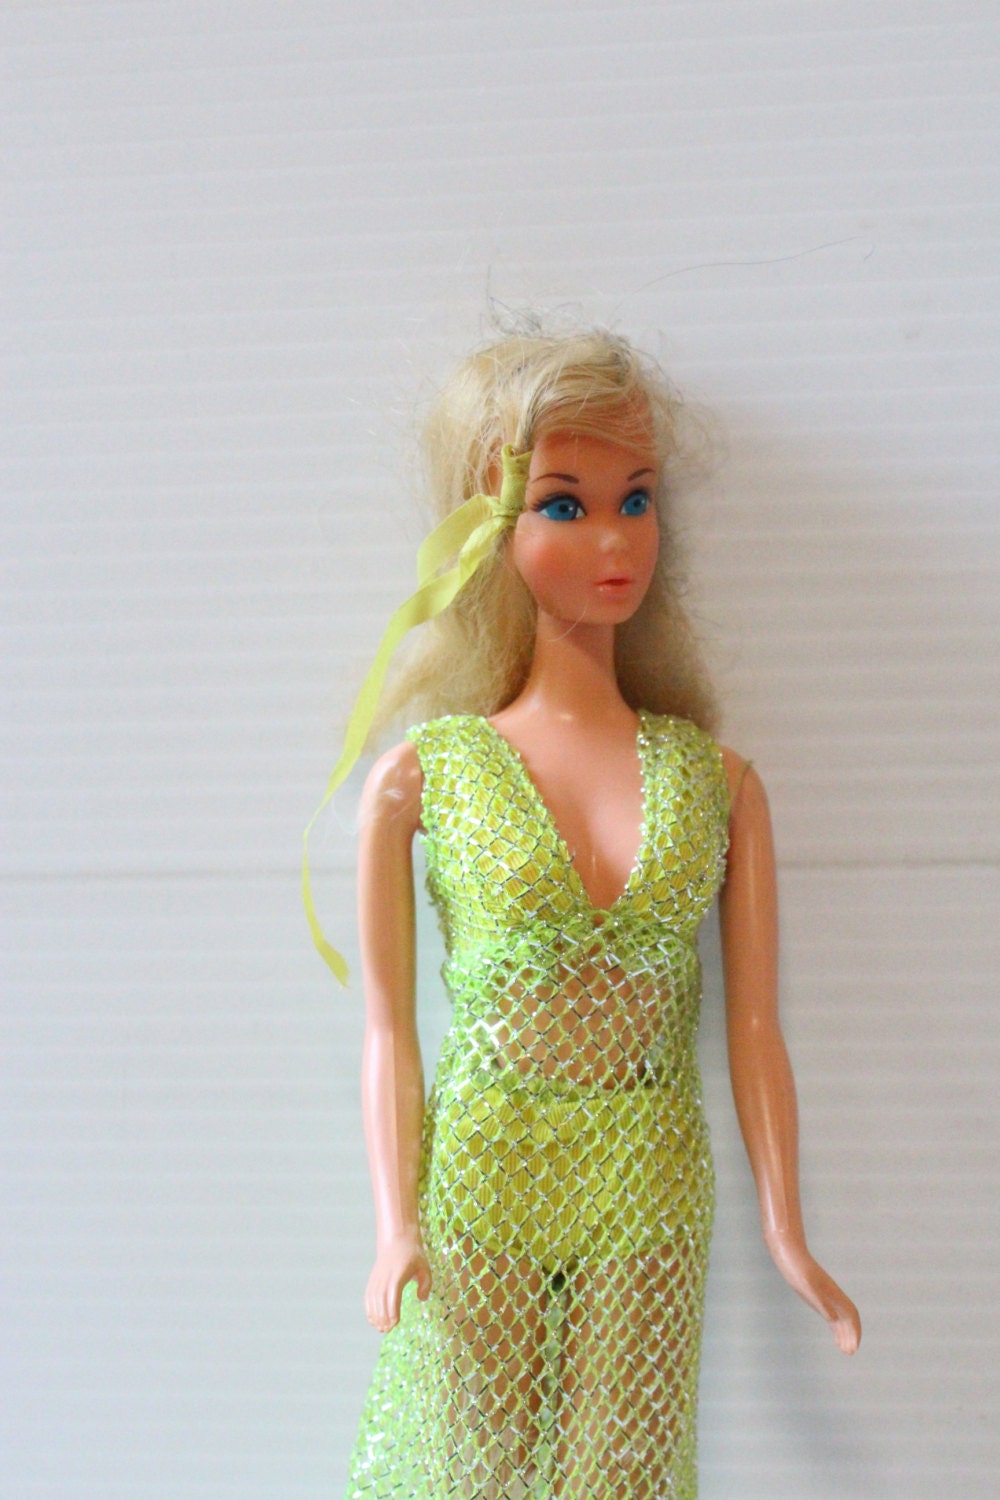 1960s barbie doll